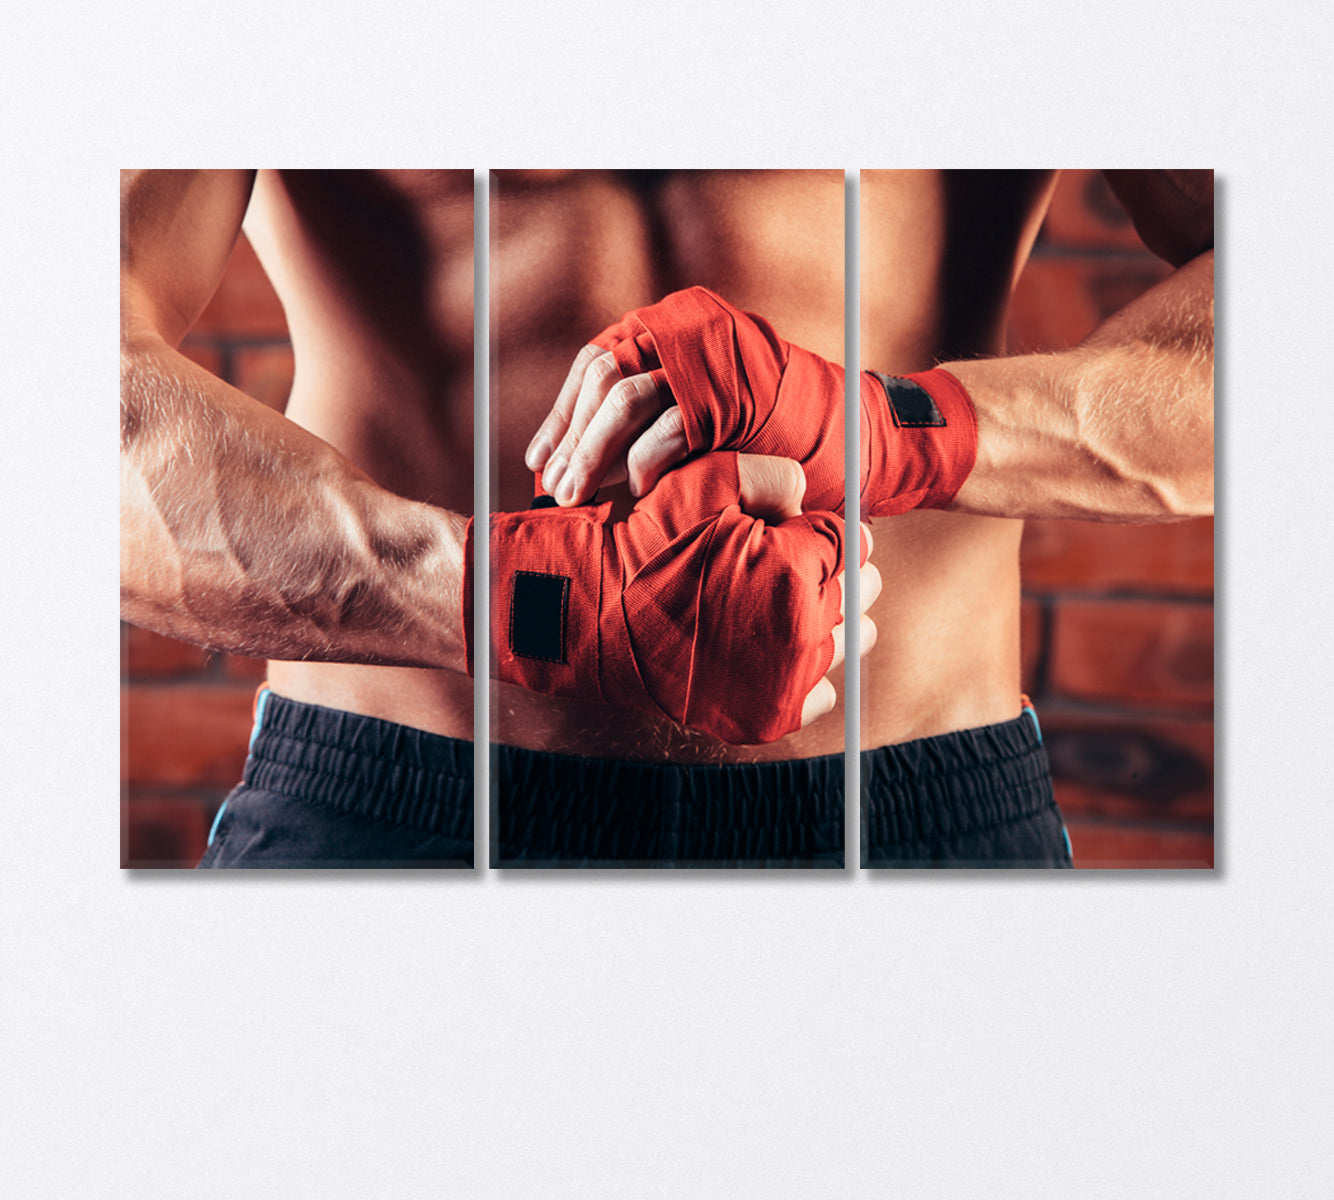 Kickboxer Bandaging Hands Preparing for Fight Canvas Print-Canvas Print-CetArt-3 Panels-36x24 inches-CetArt